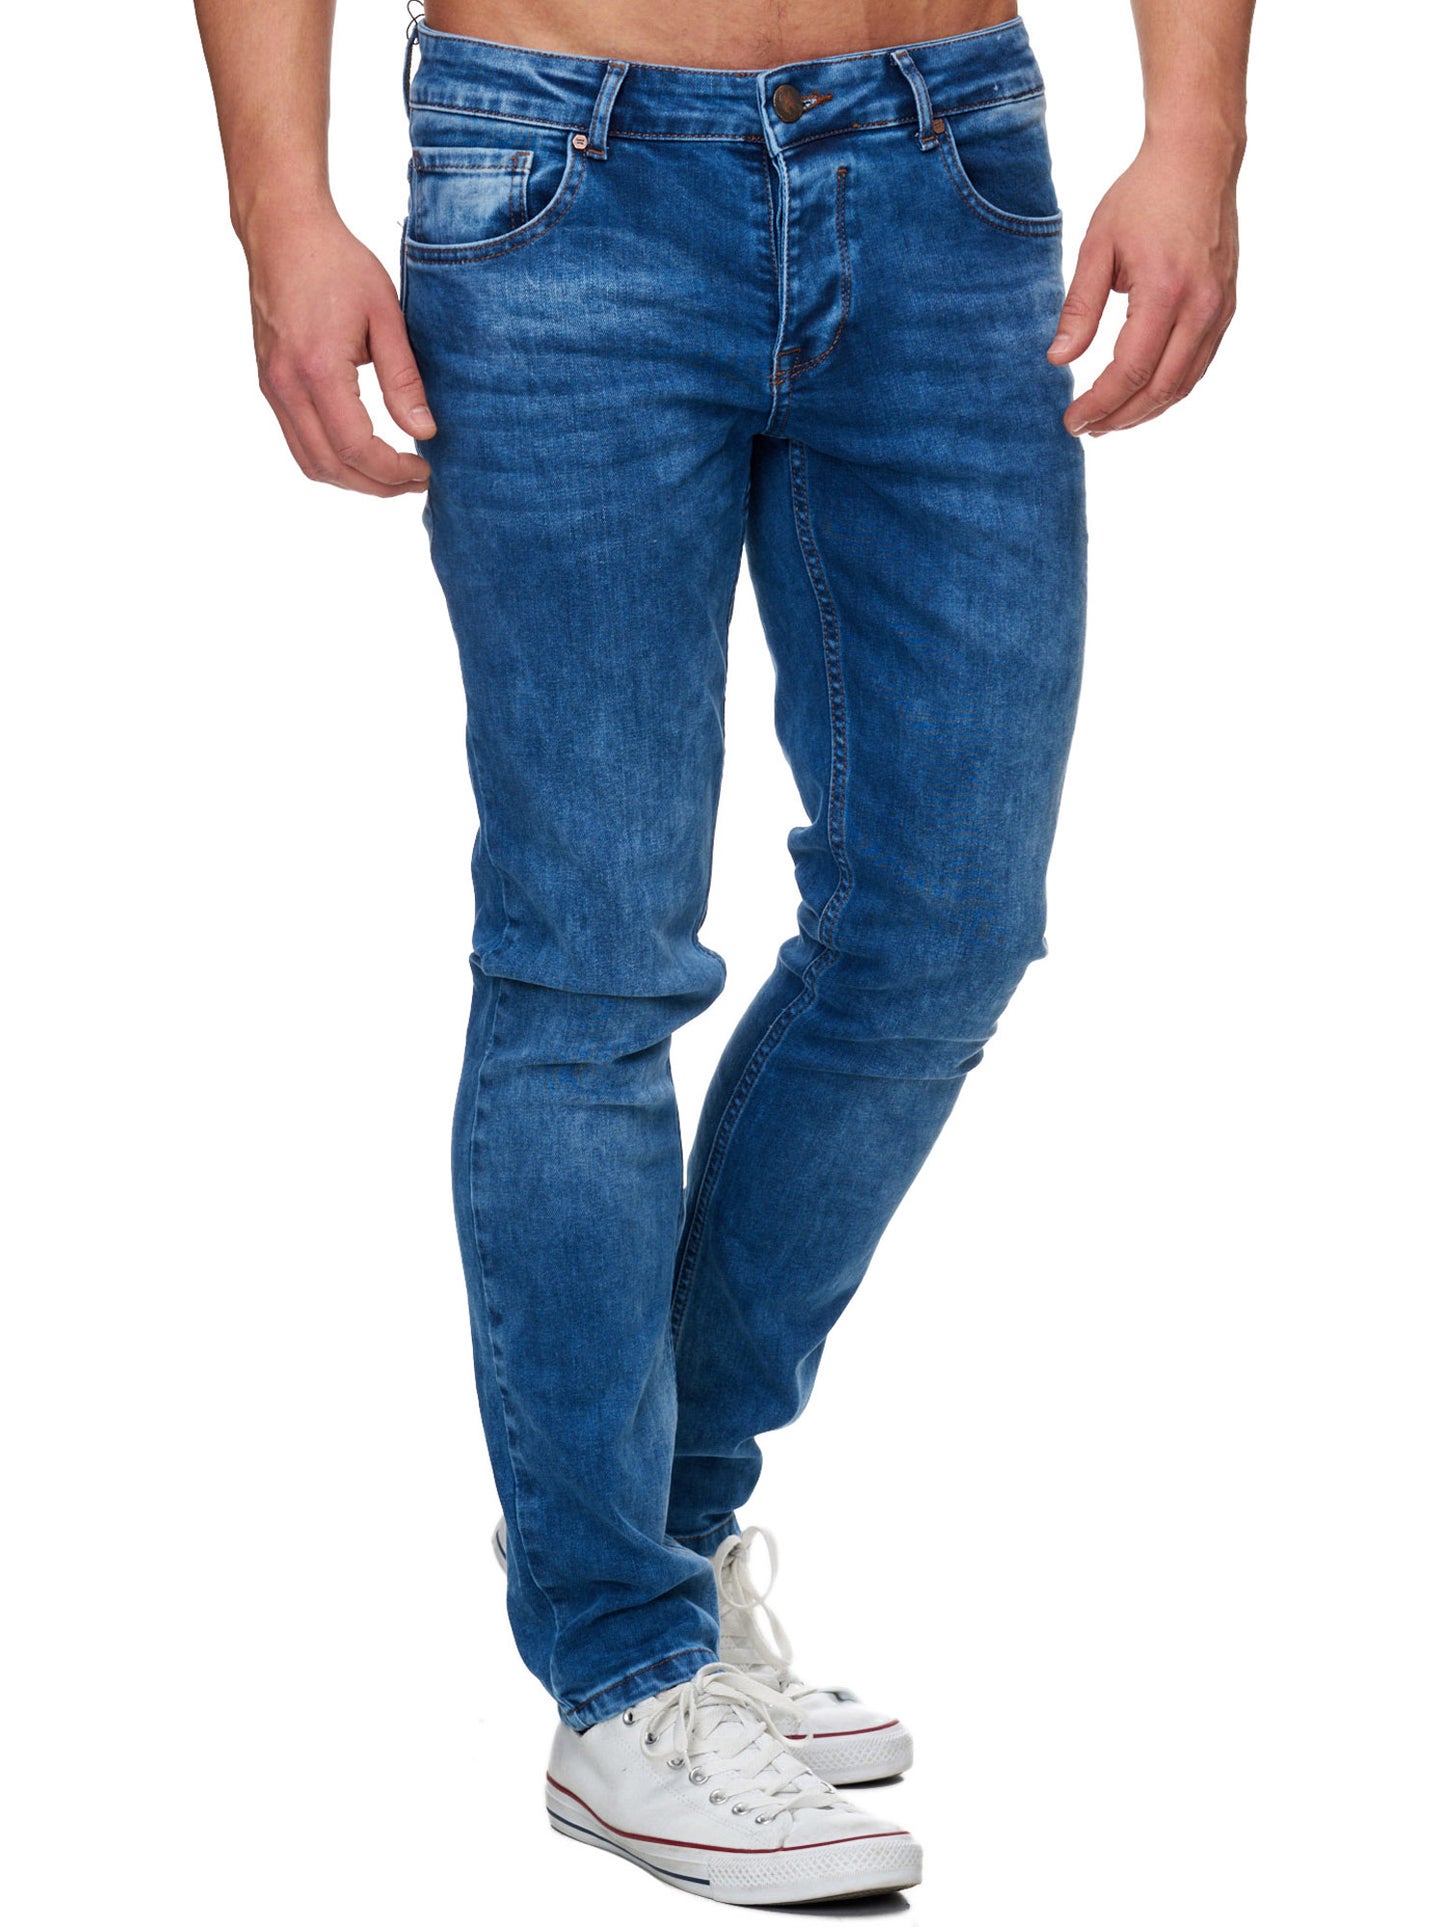 Tazzio Herren Jeans Slim Fit 16533 Blau